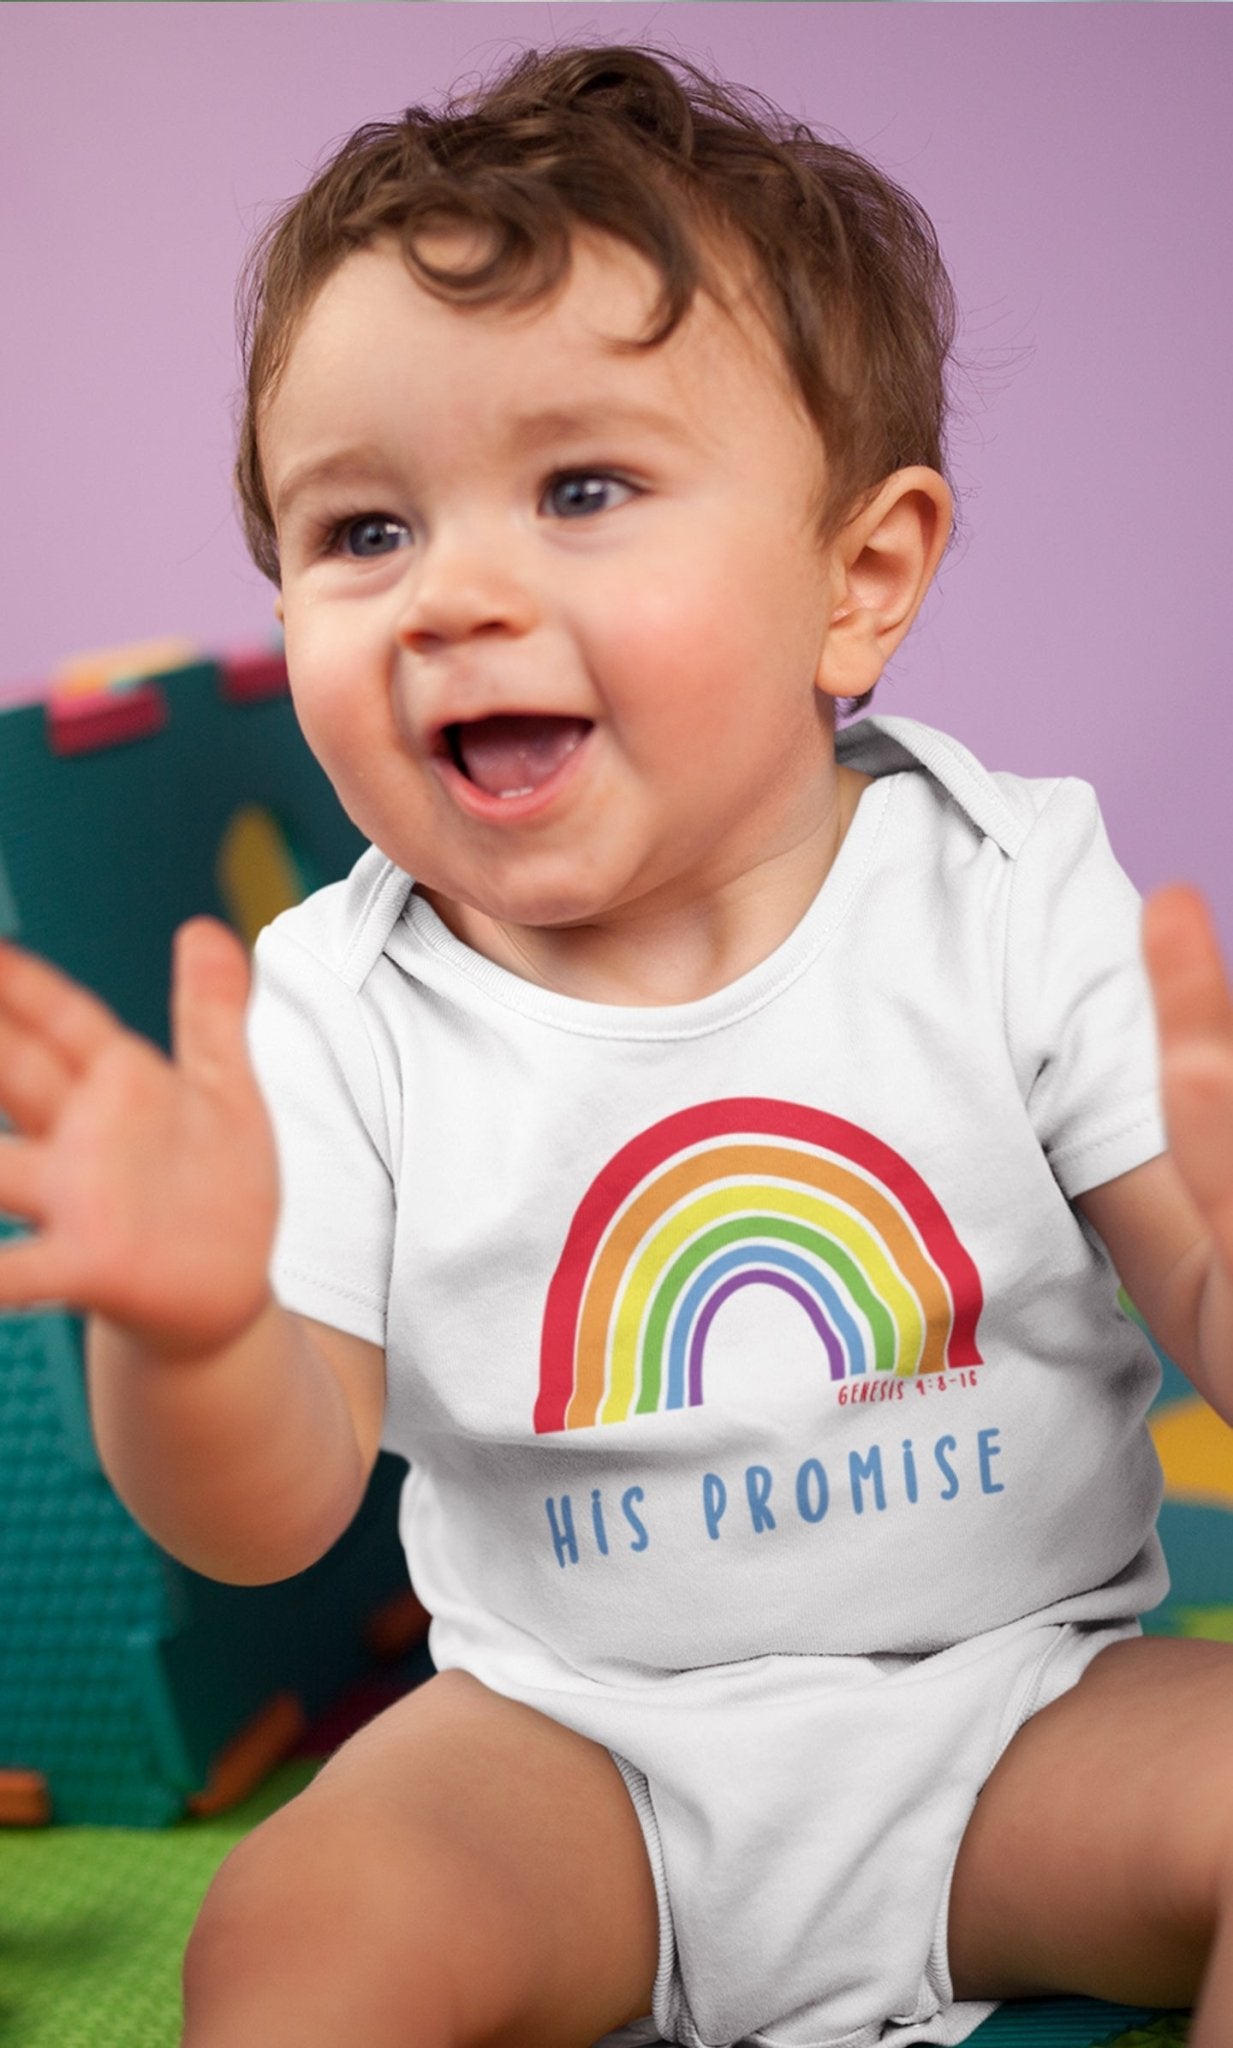 His Promise - Baby’s Romper - Trini-T Ministries